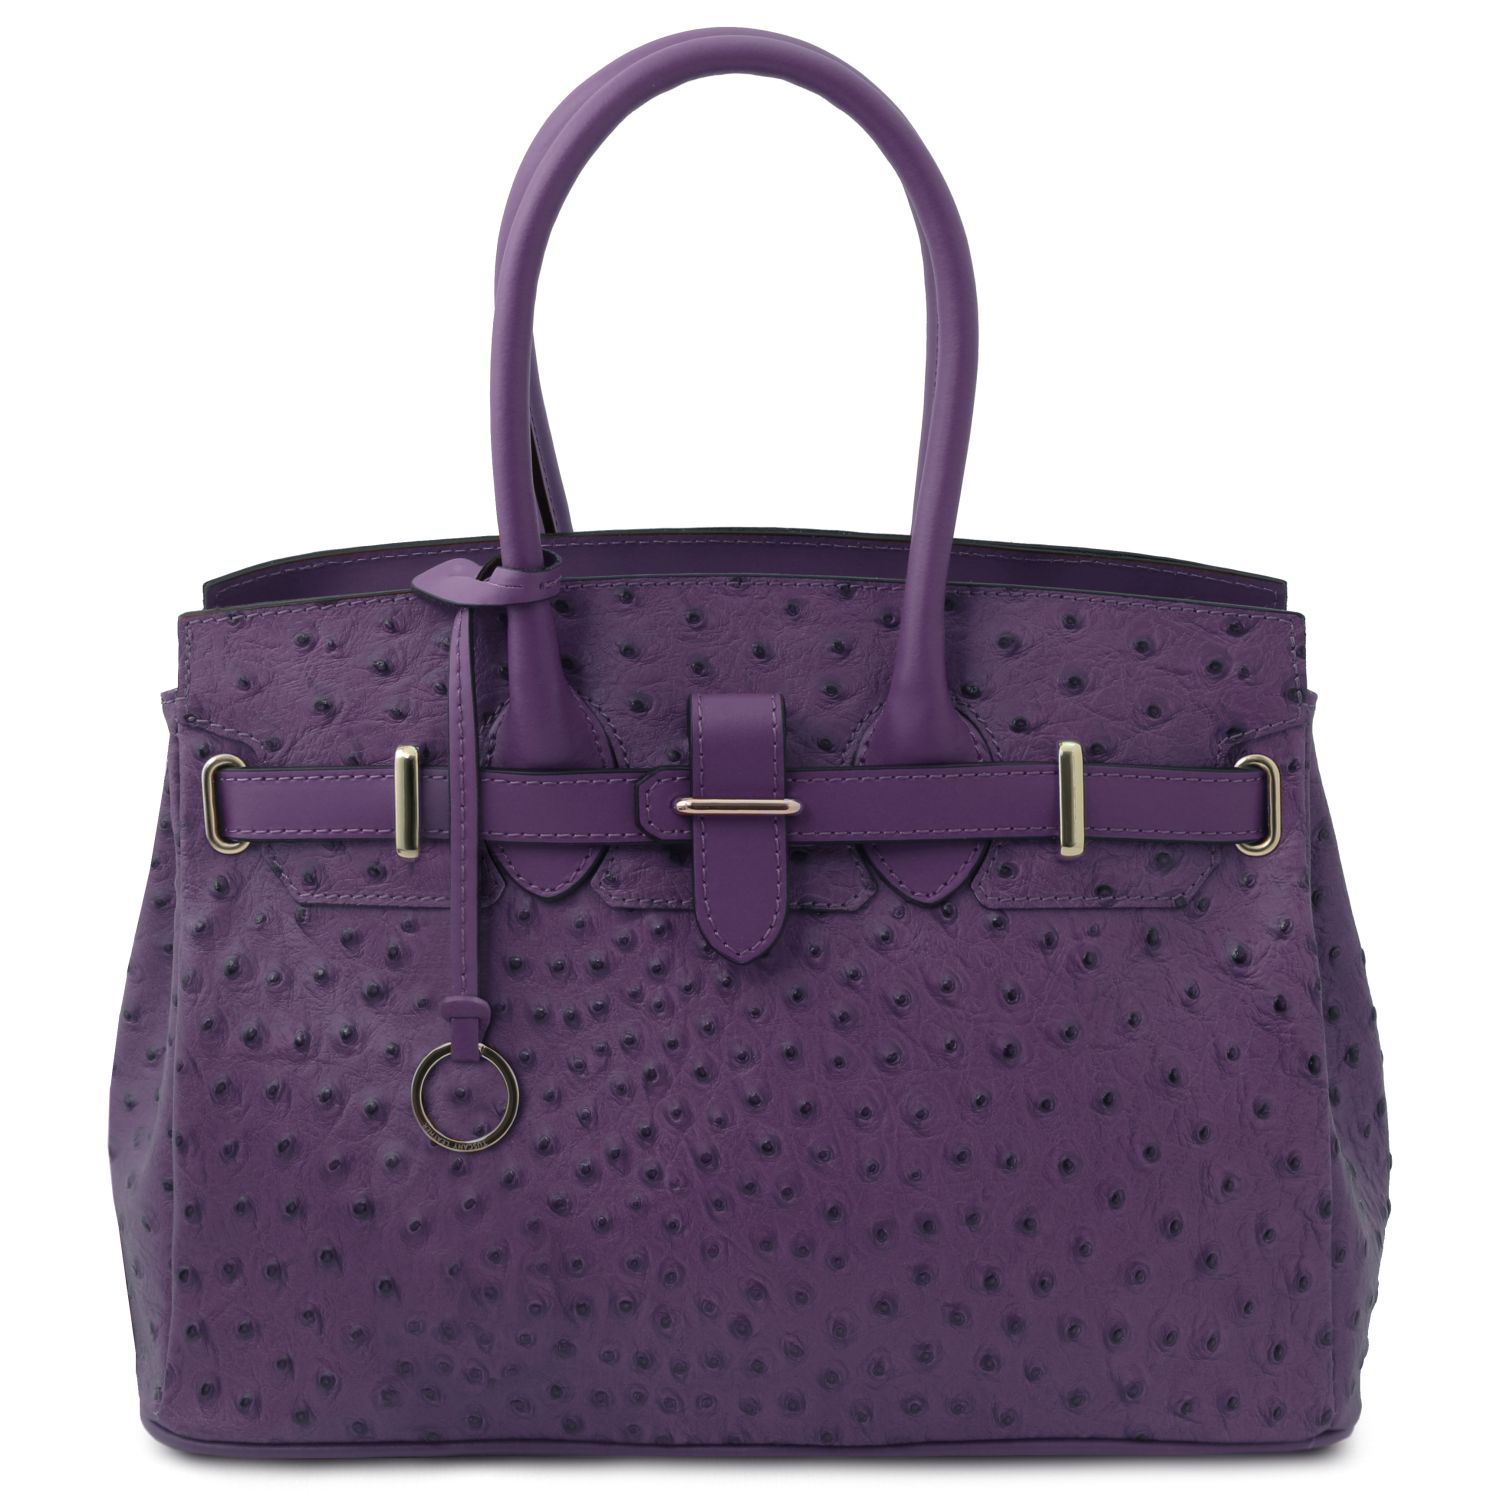 TL Bag Handbag in ostrich-print leather - Purple